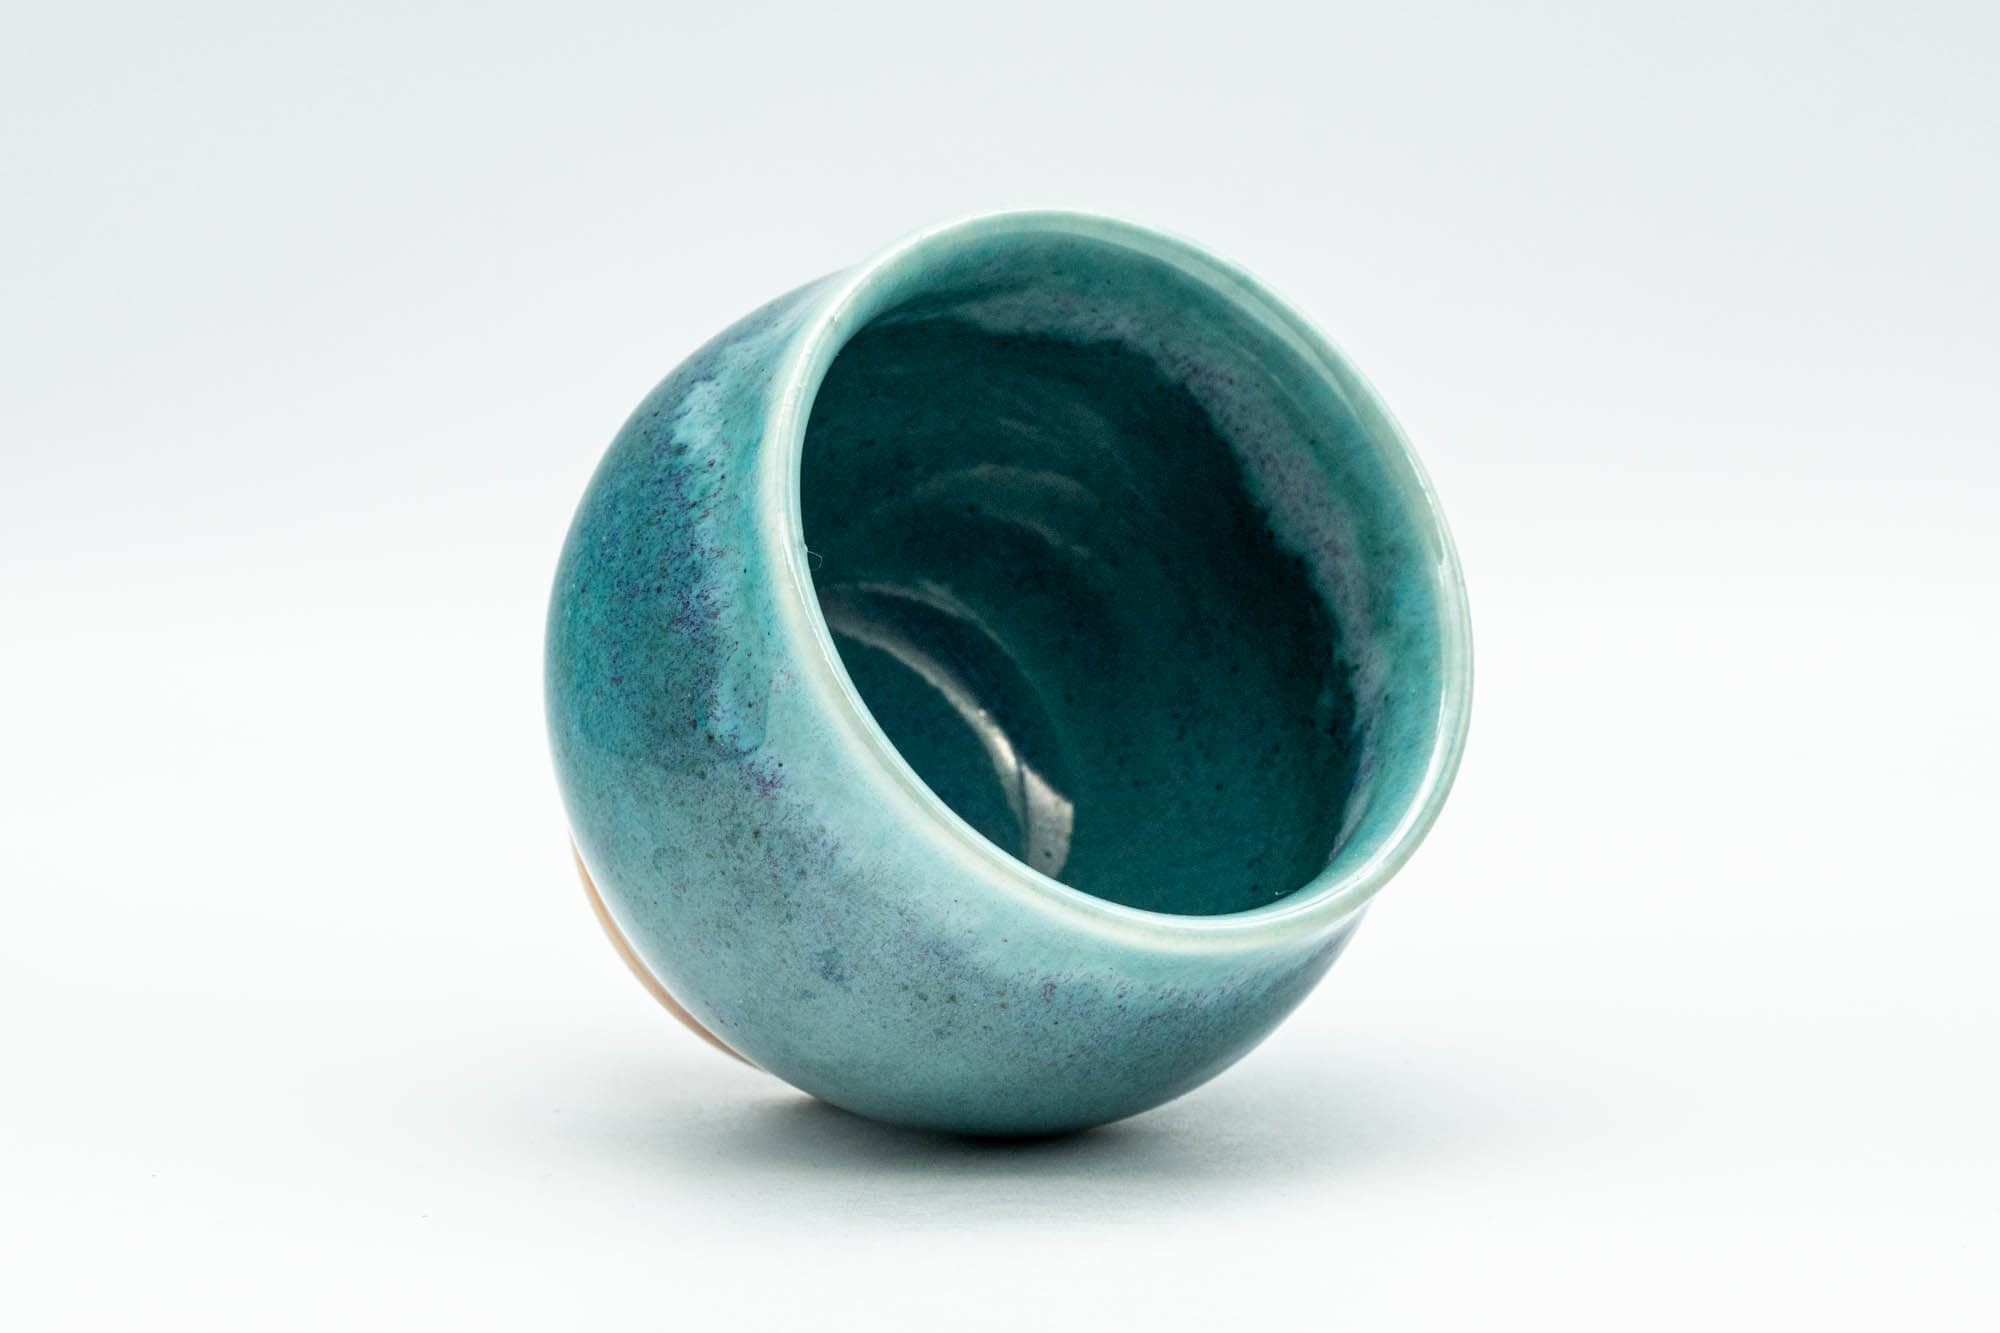 Japanese Teacups - Set of 3 Turquoise Drip-Glazed Yunomi - 120ml